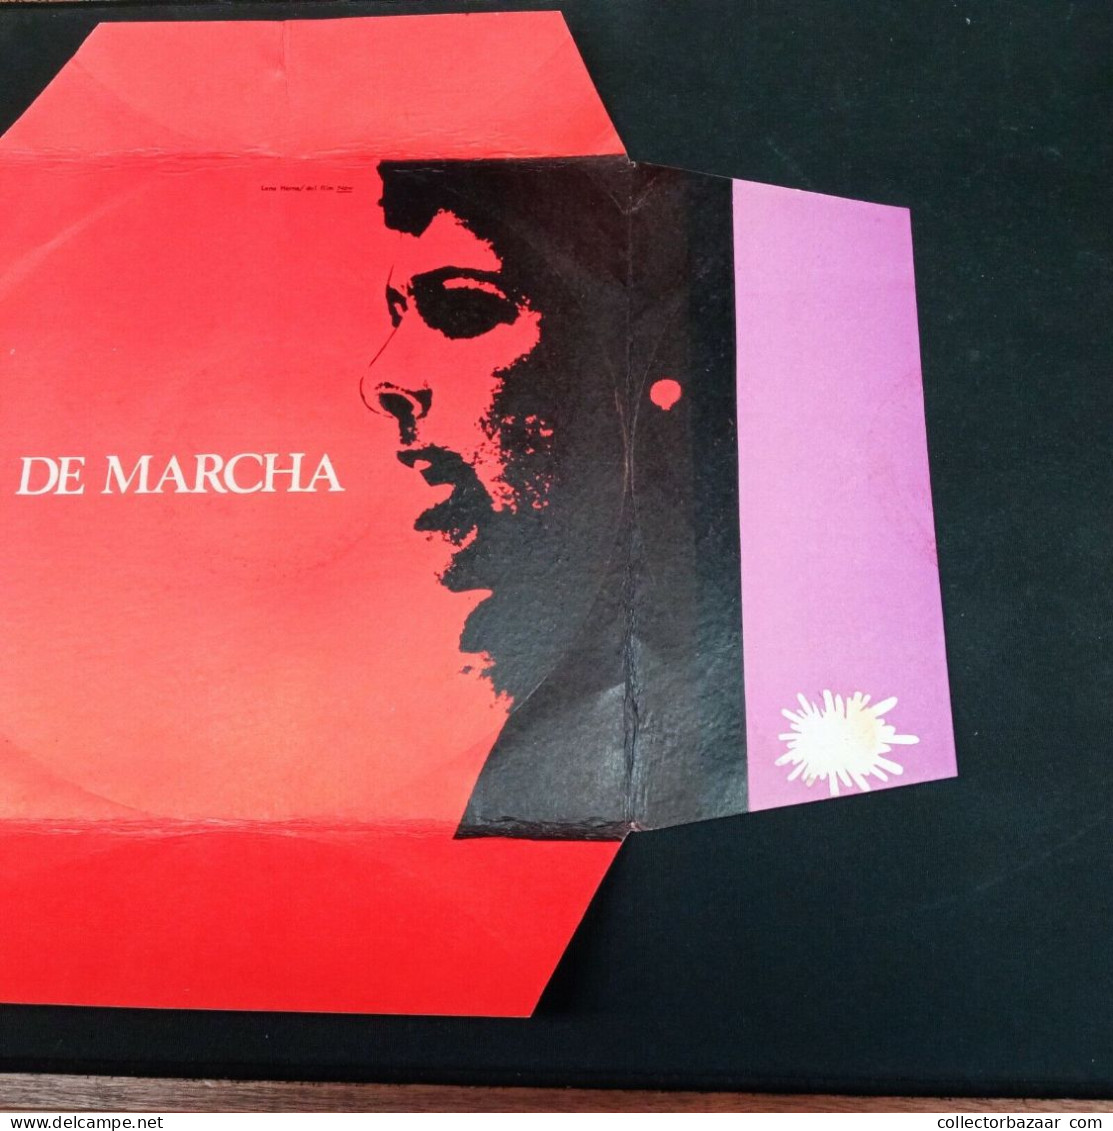 Resonance of Revolution: 1967 Marcha Film Festival LP with Blankito Yupanqui's Captivating Revolutionary Aesthetics